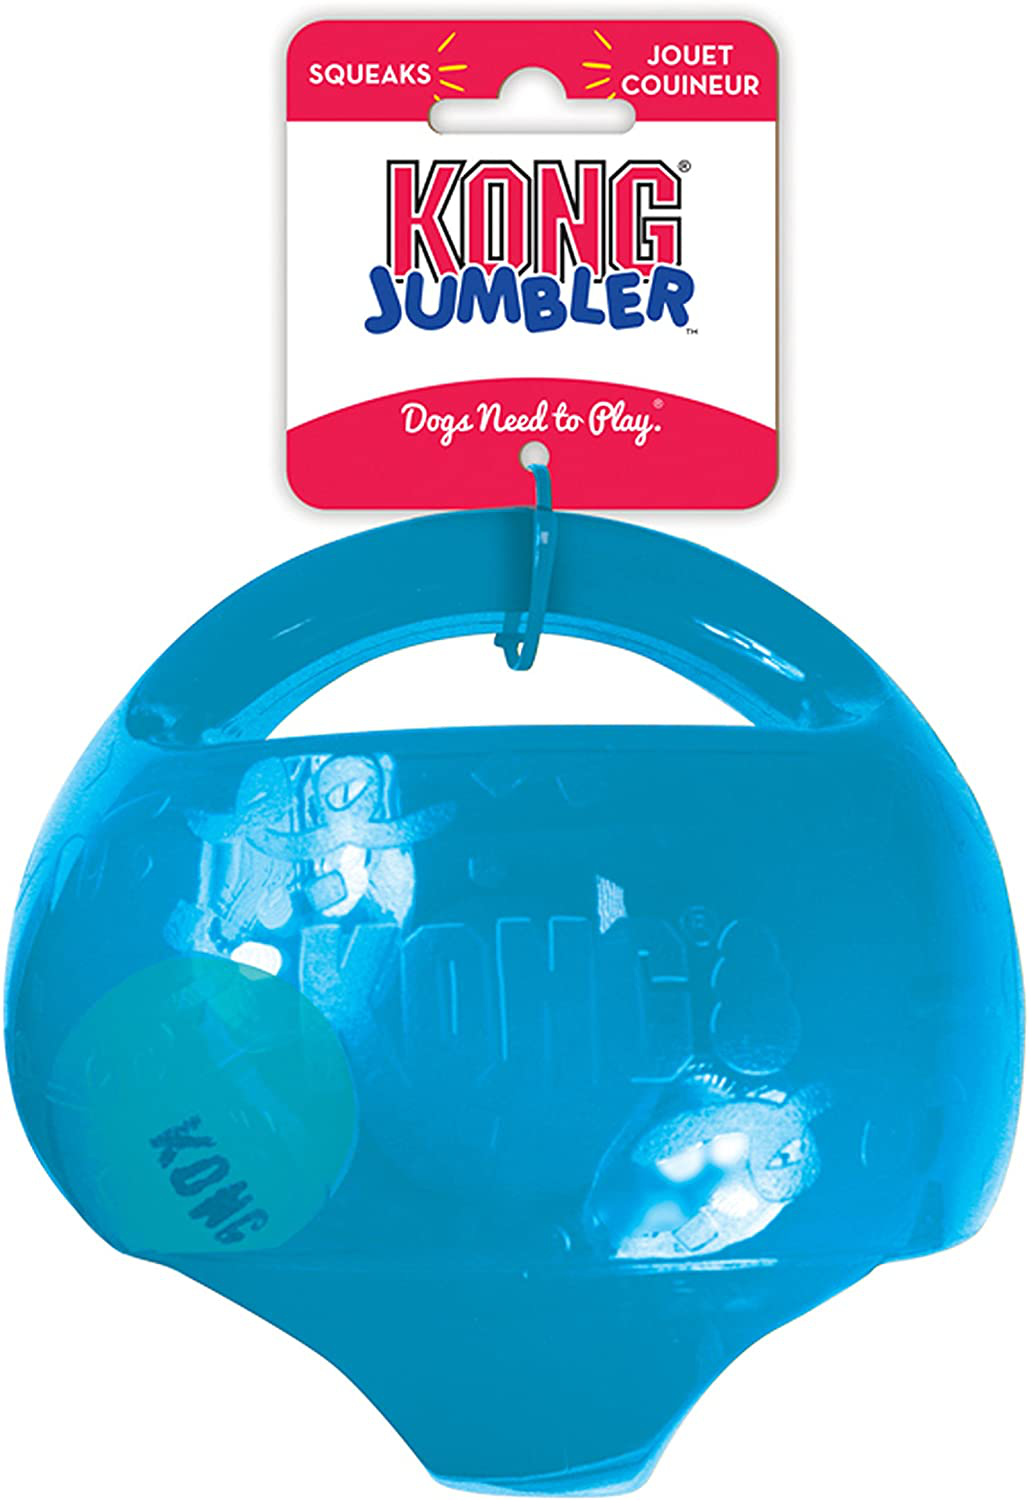 KONG - Jumbler Ball - Interactive Fetch Dog Toy with Tennis Ball (Assorted Colors) Animals & Pet Supplies > Pet Supplies > Dog Supplies > Dog Toys KONG   